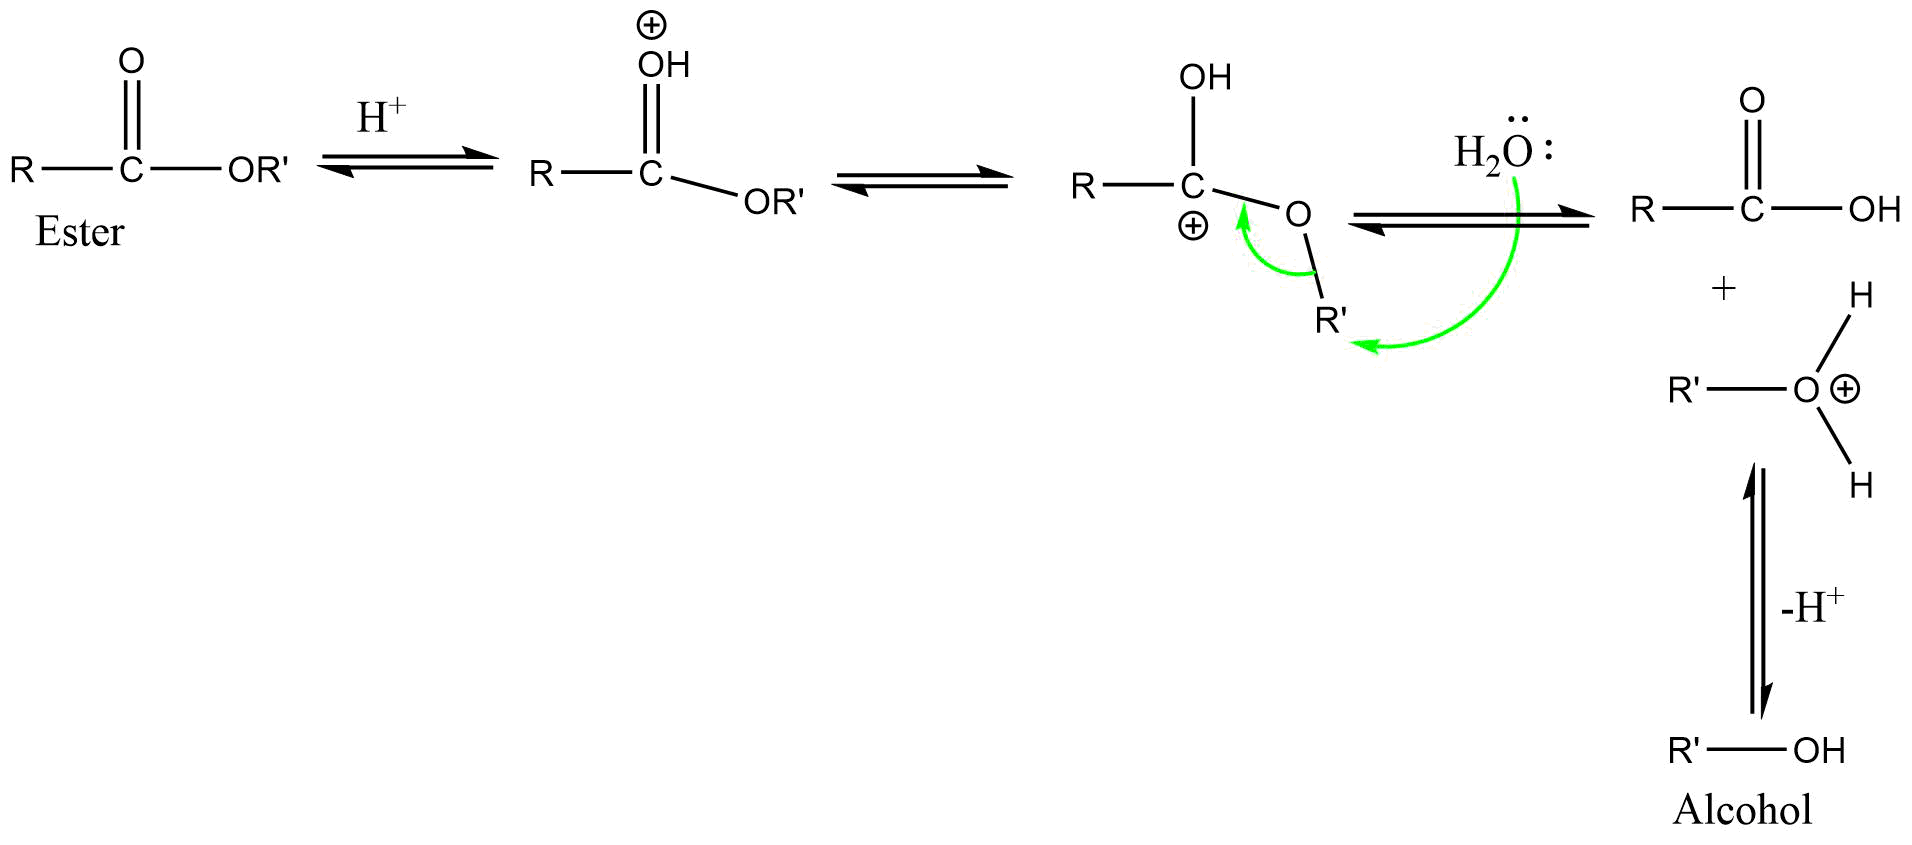 AAL2 (Acid catalyzed alkoxy bond cleavage bimolecular reaction)